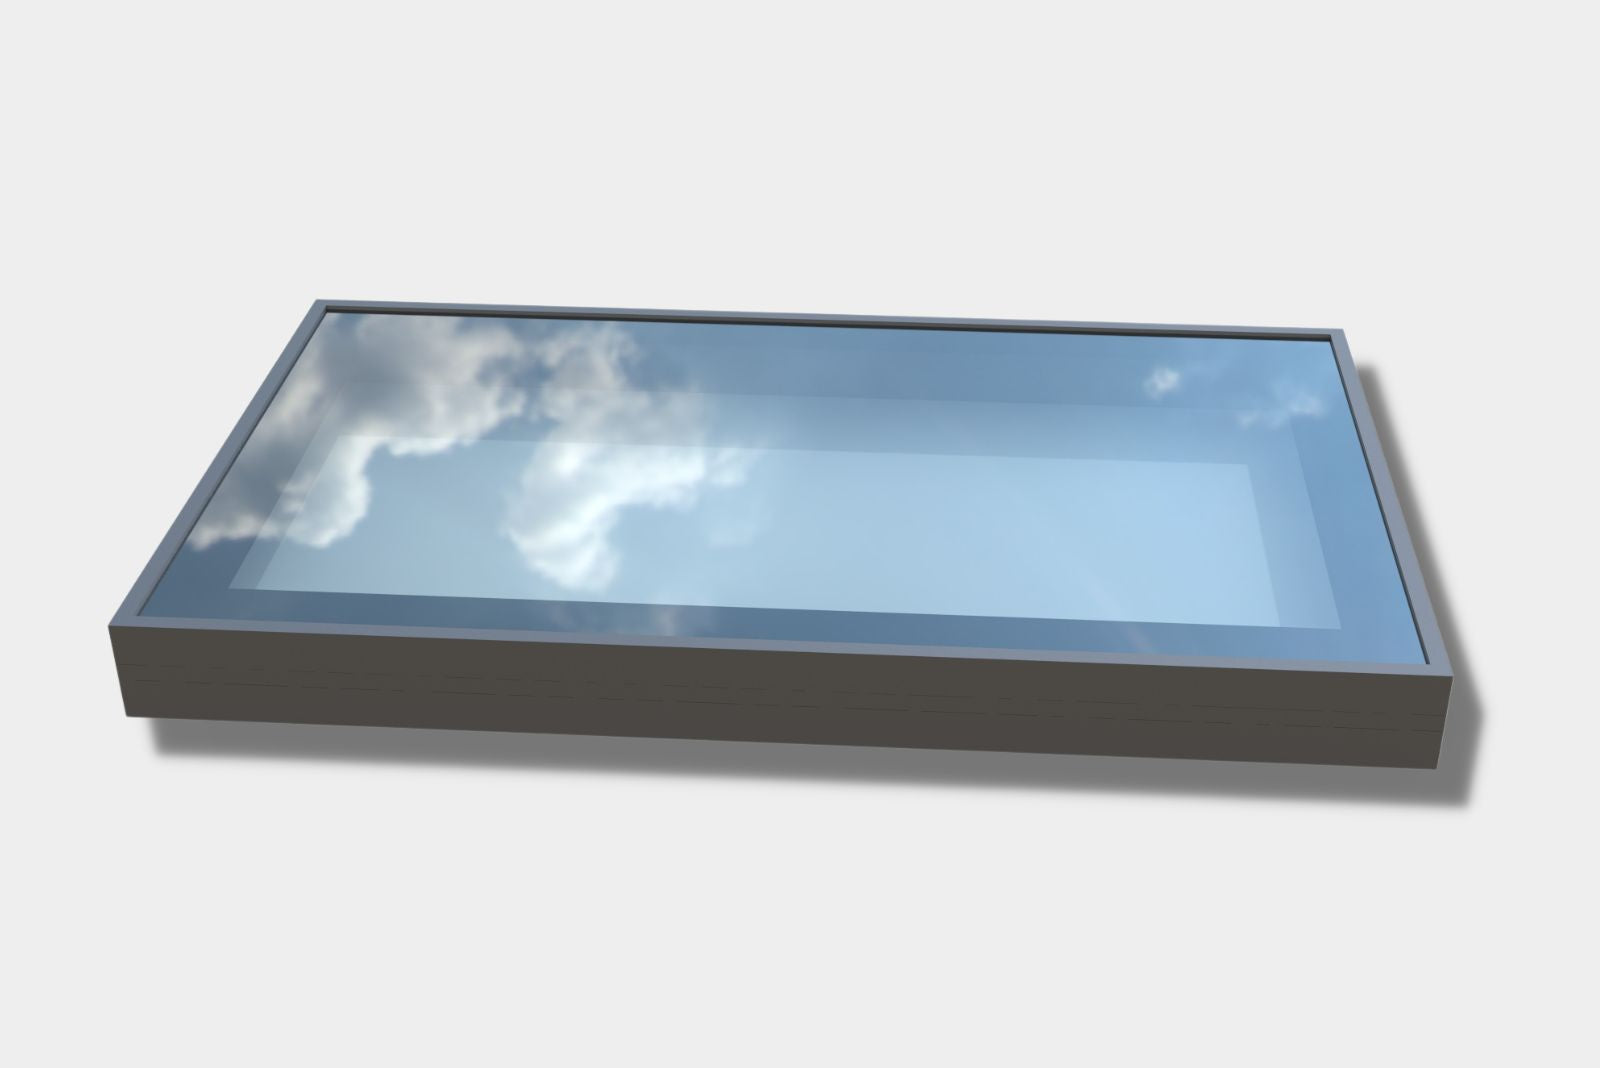 Framed Skylight 600 x 900 mm – Double glazed